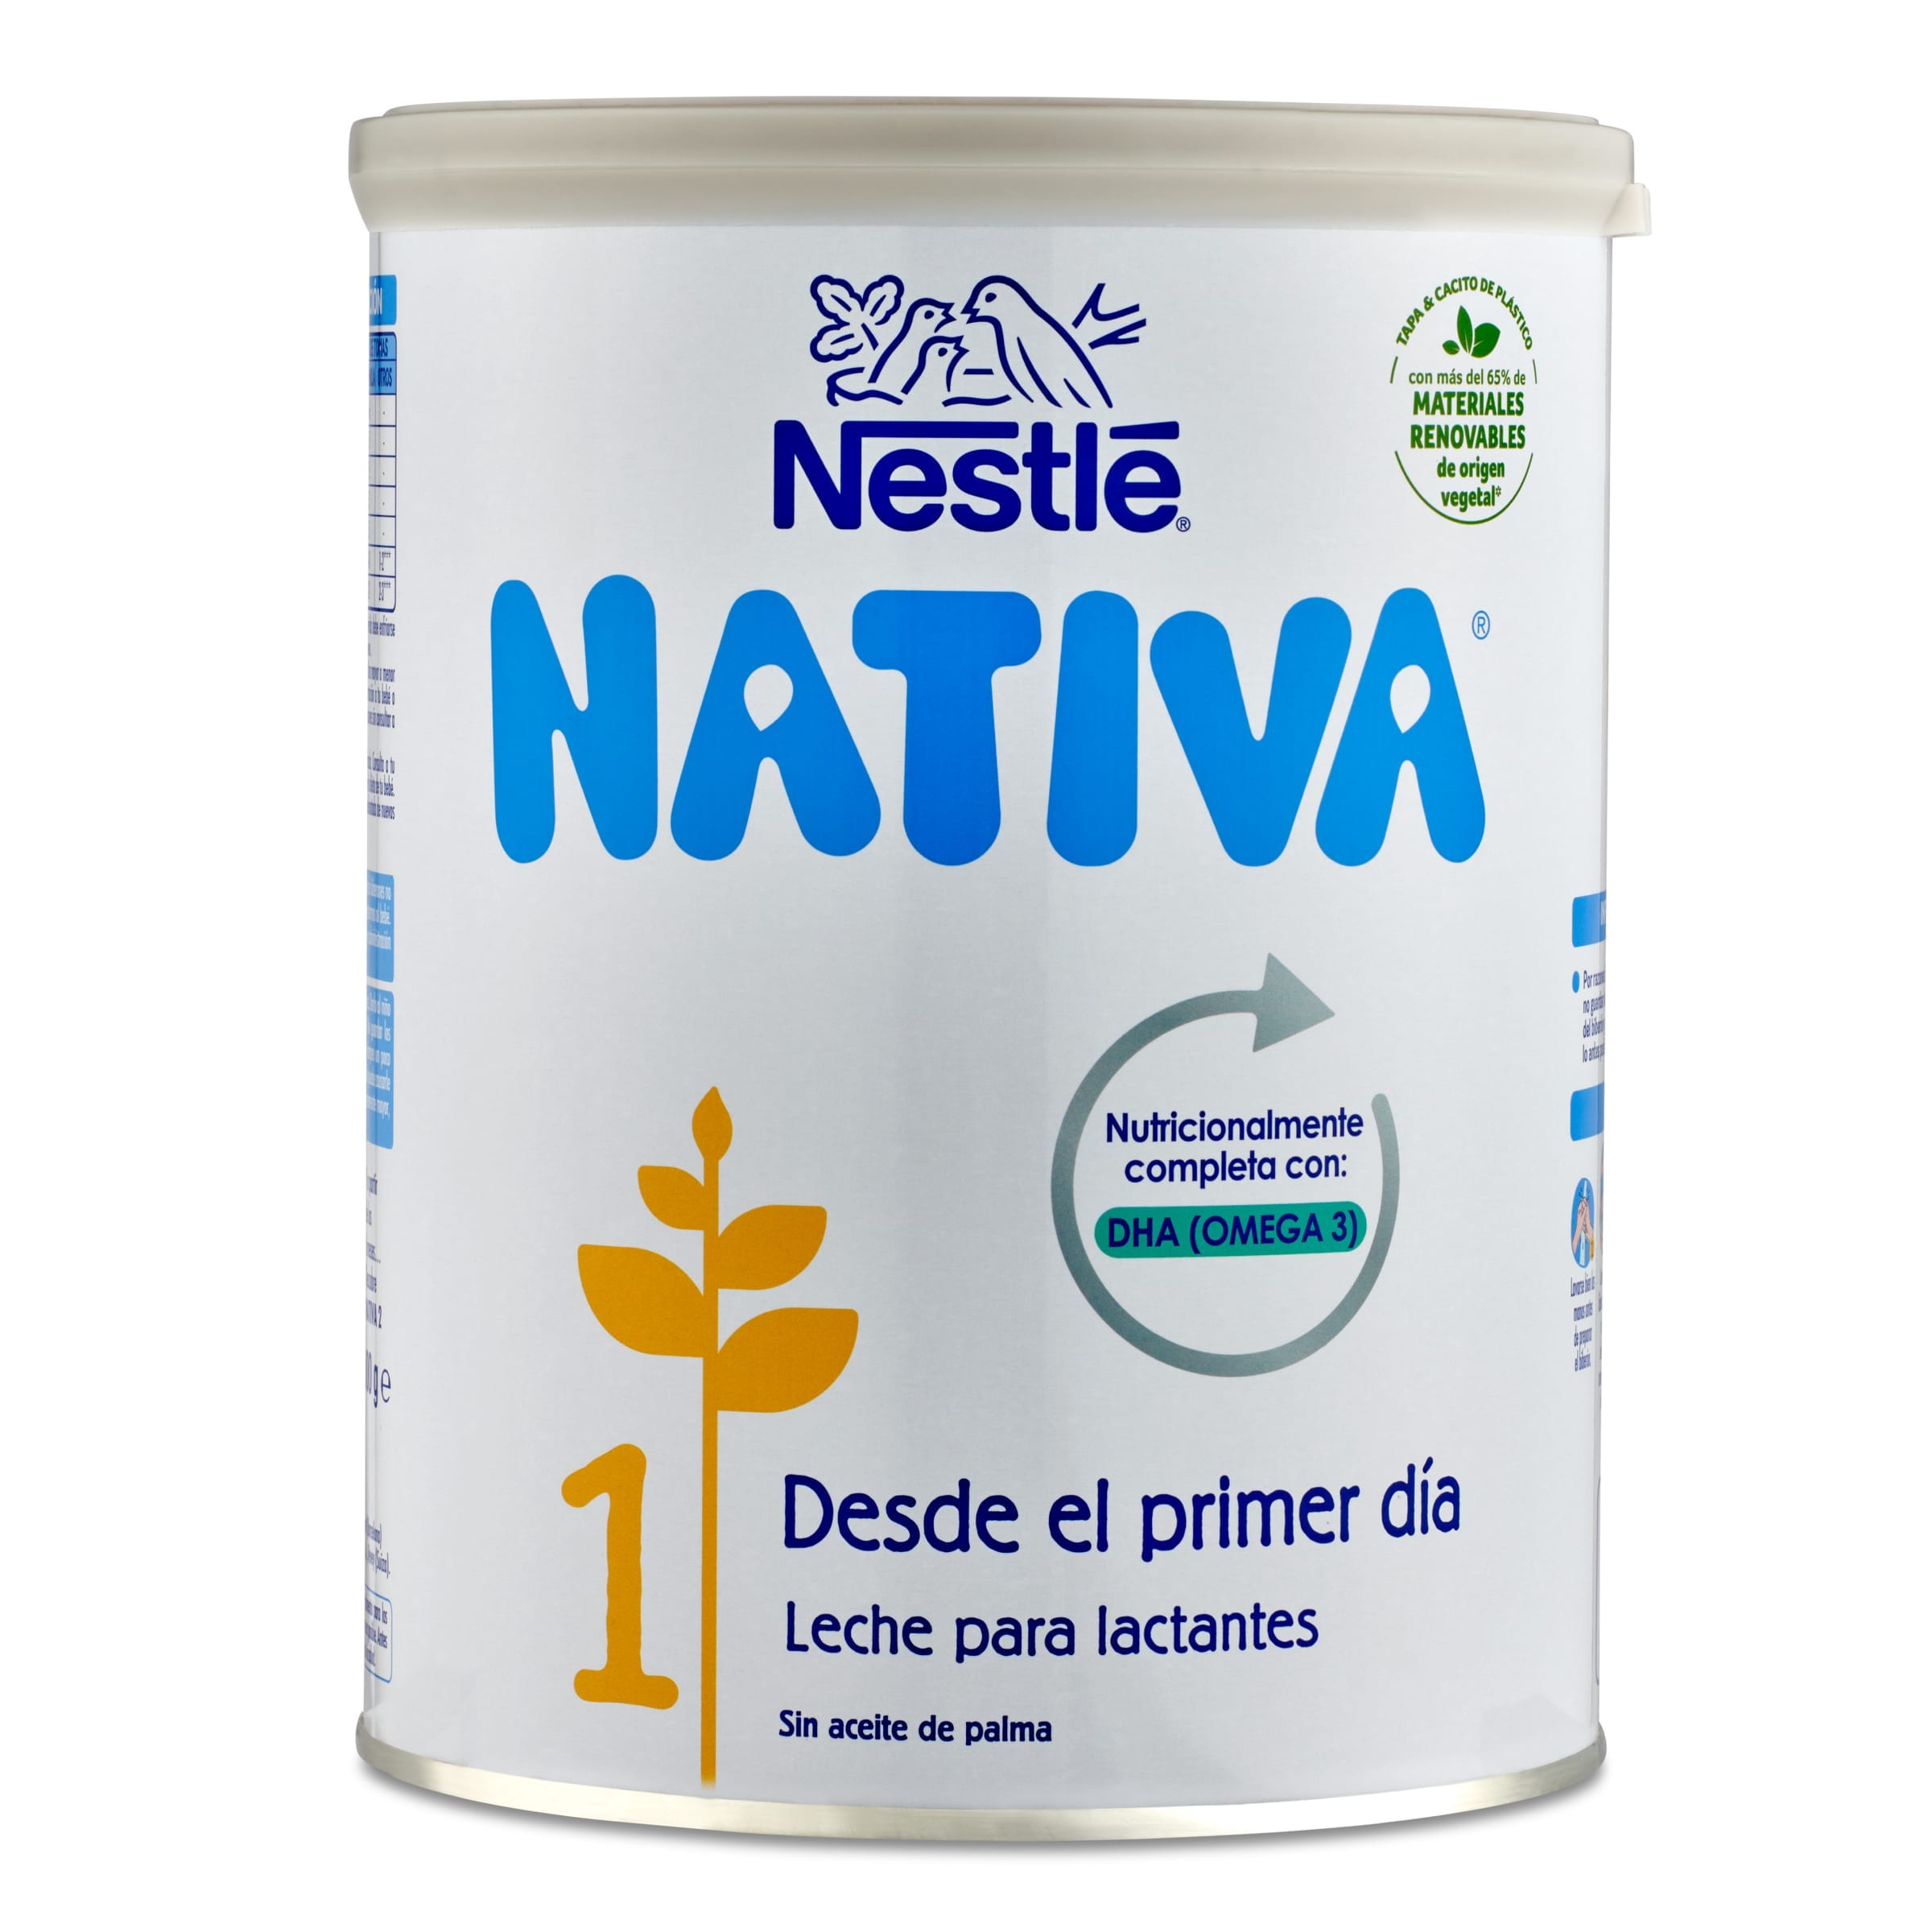 Leche infantil 1 inicio Nativa lata 800 g - Supermercados DIA